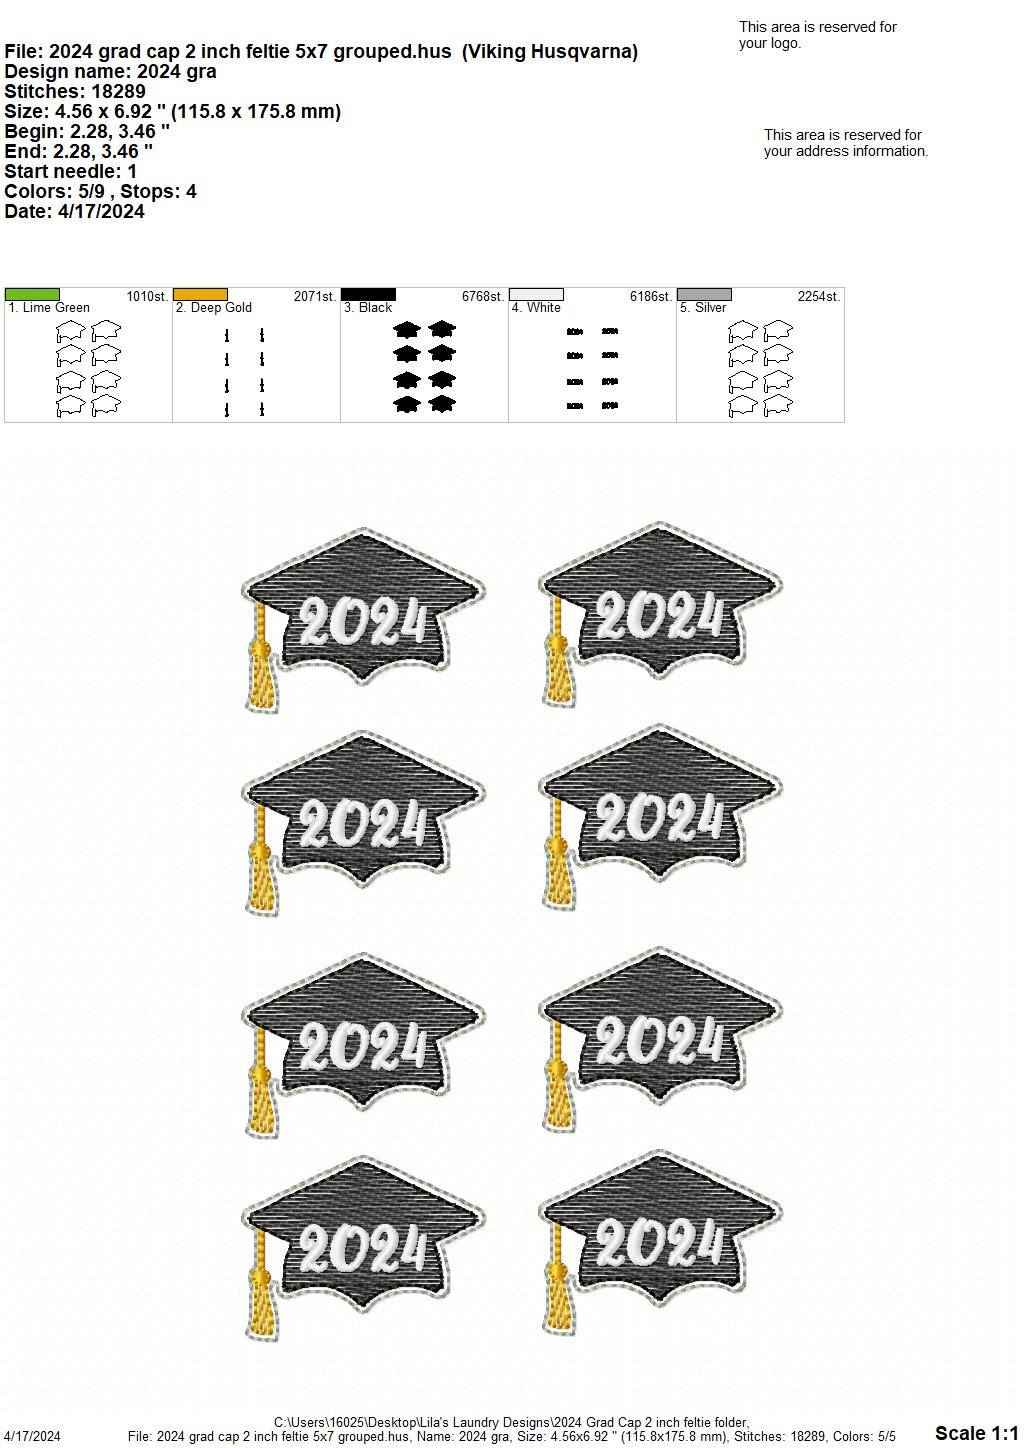 2024 Grad Cap - 2 inch feltie - Digital Embroidery Design